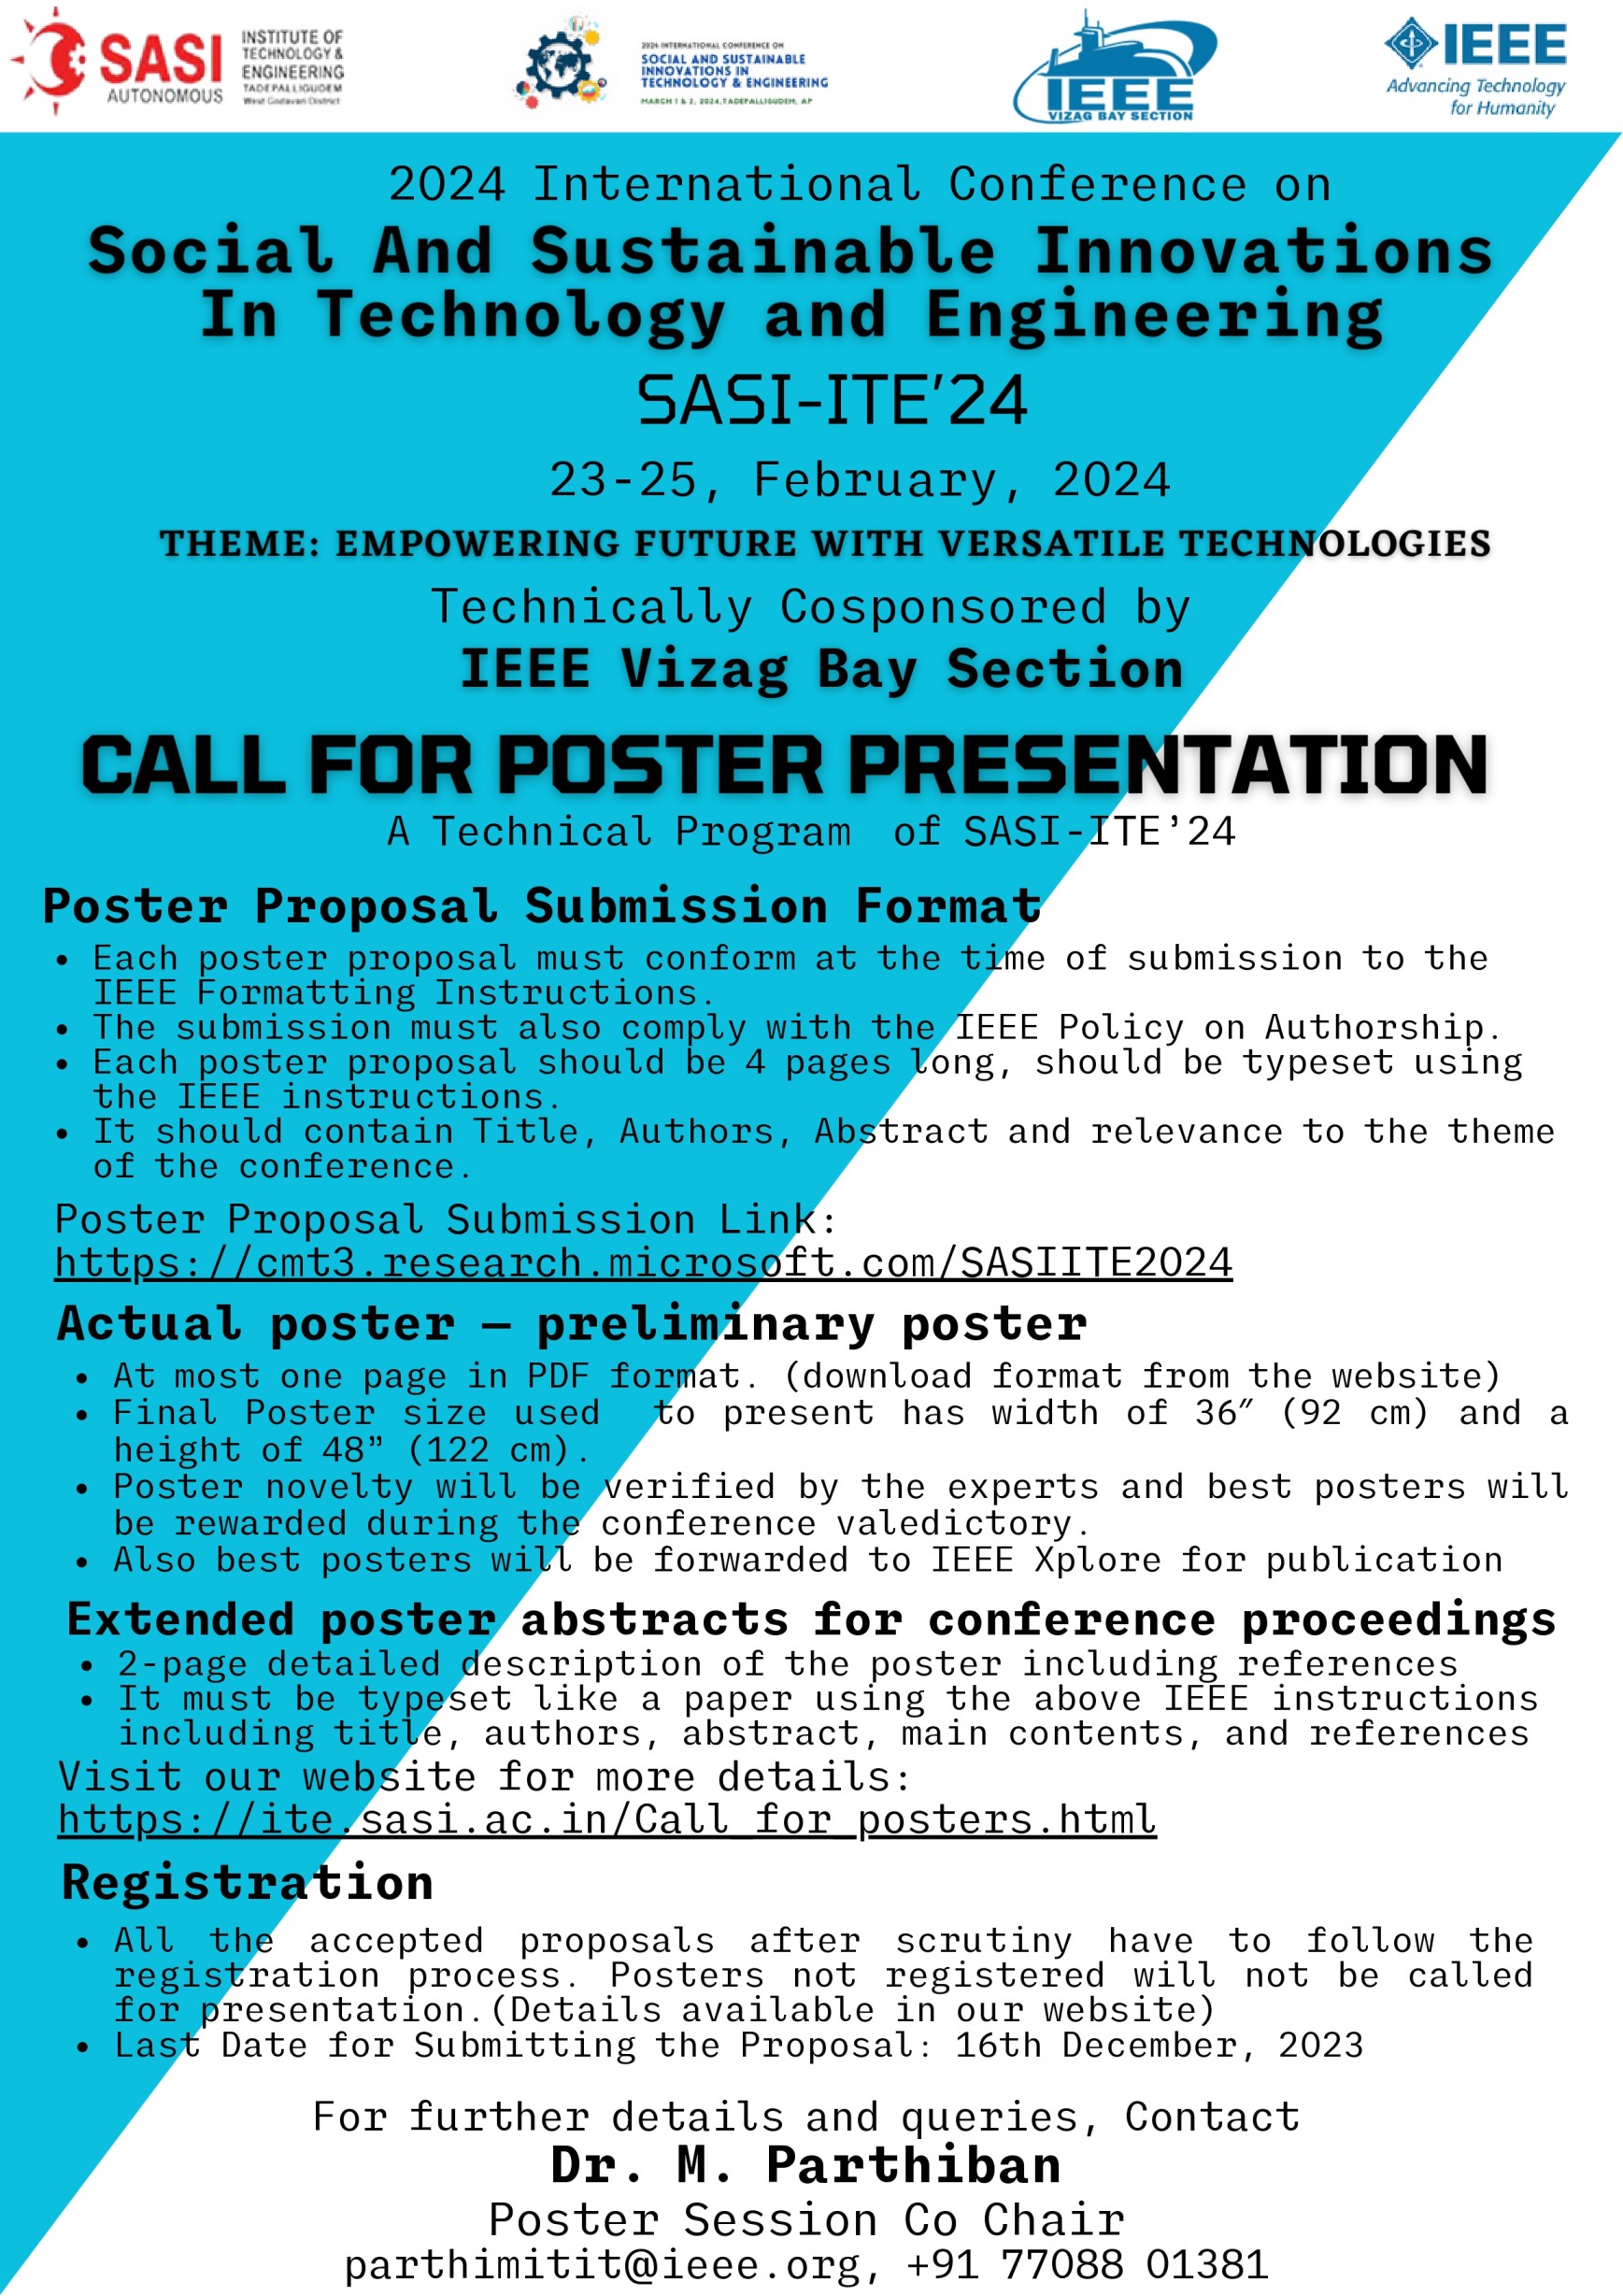 IEEE International Conference Poster Presentation SASI-ITE'24